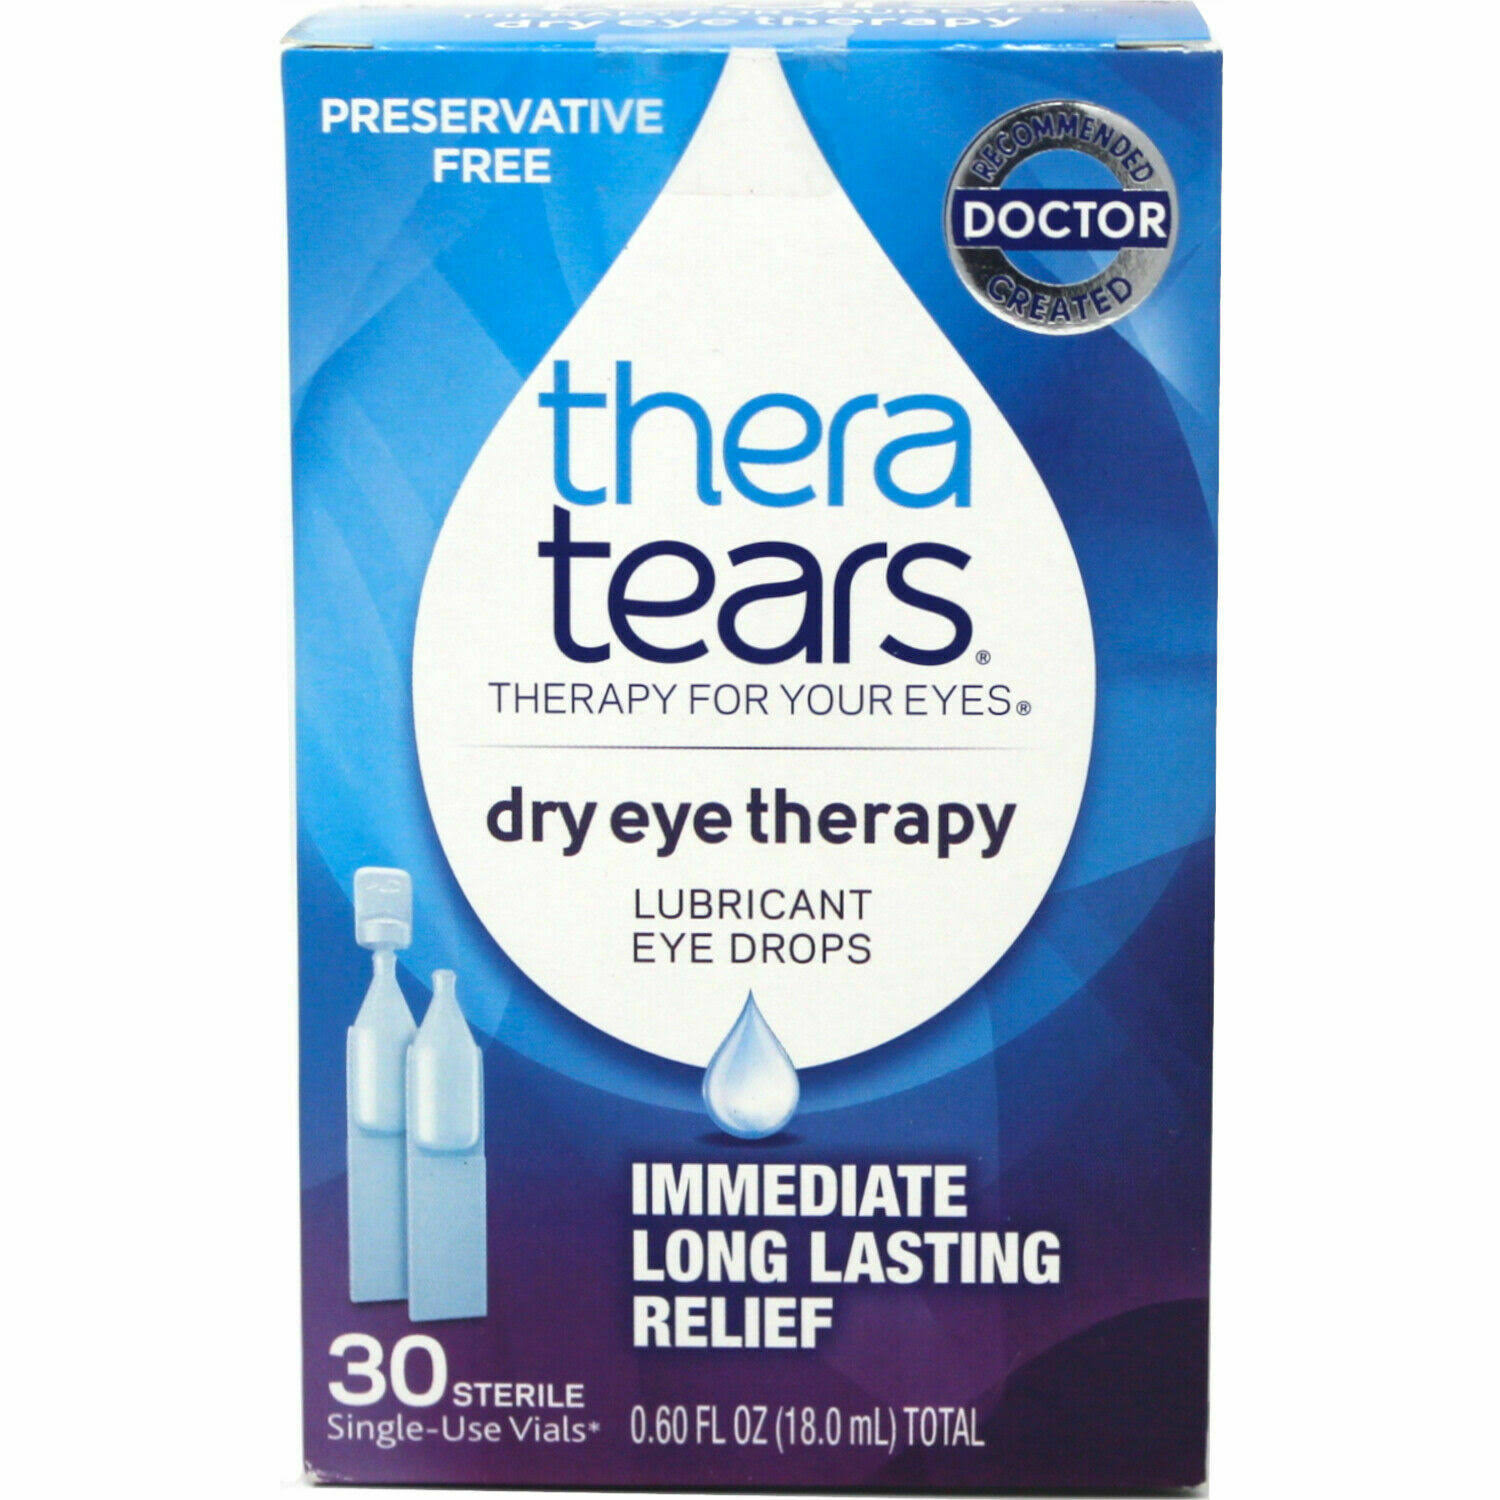 Thera Tears Eye Drops, Lubricant, Dry Eye Therapy - 30 vials, 0.60 fl oz